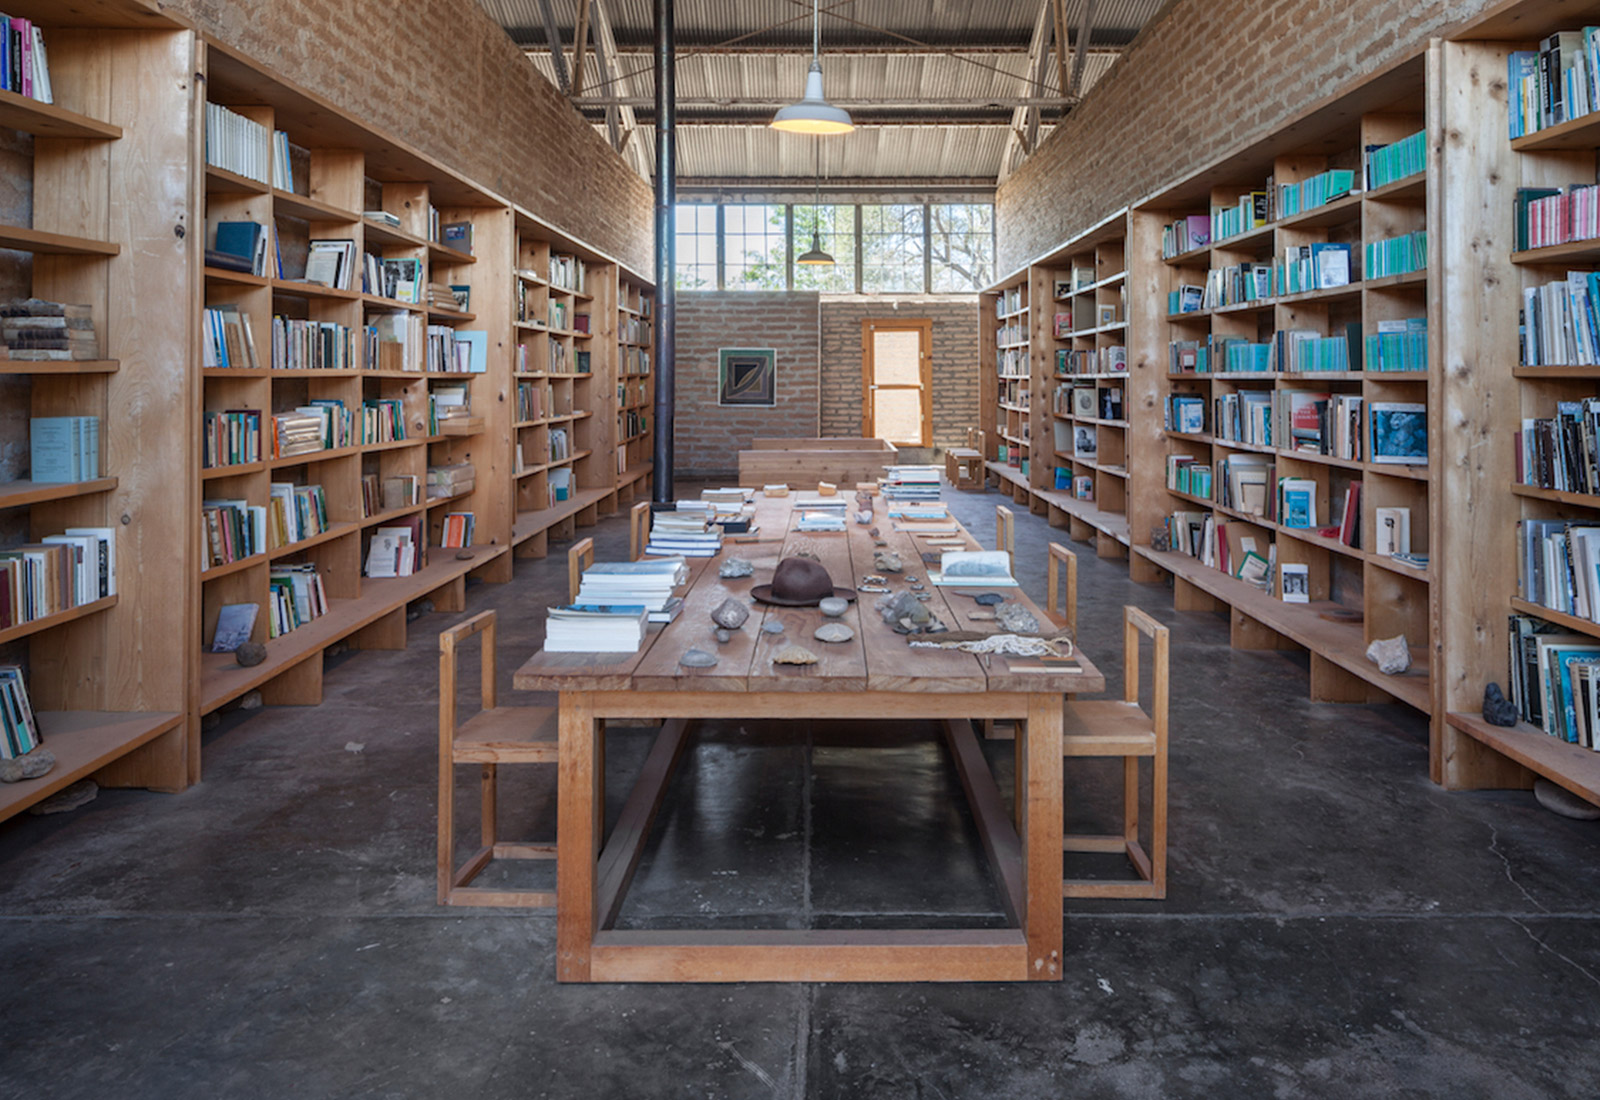 South Library, La Mansana de Chinati/The Block, Judd Foundation, Marfa, TX